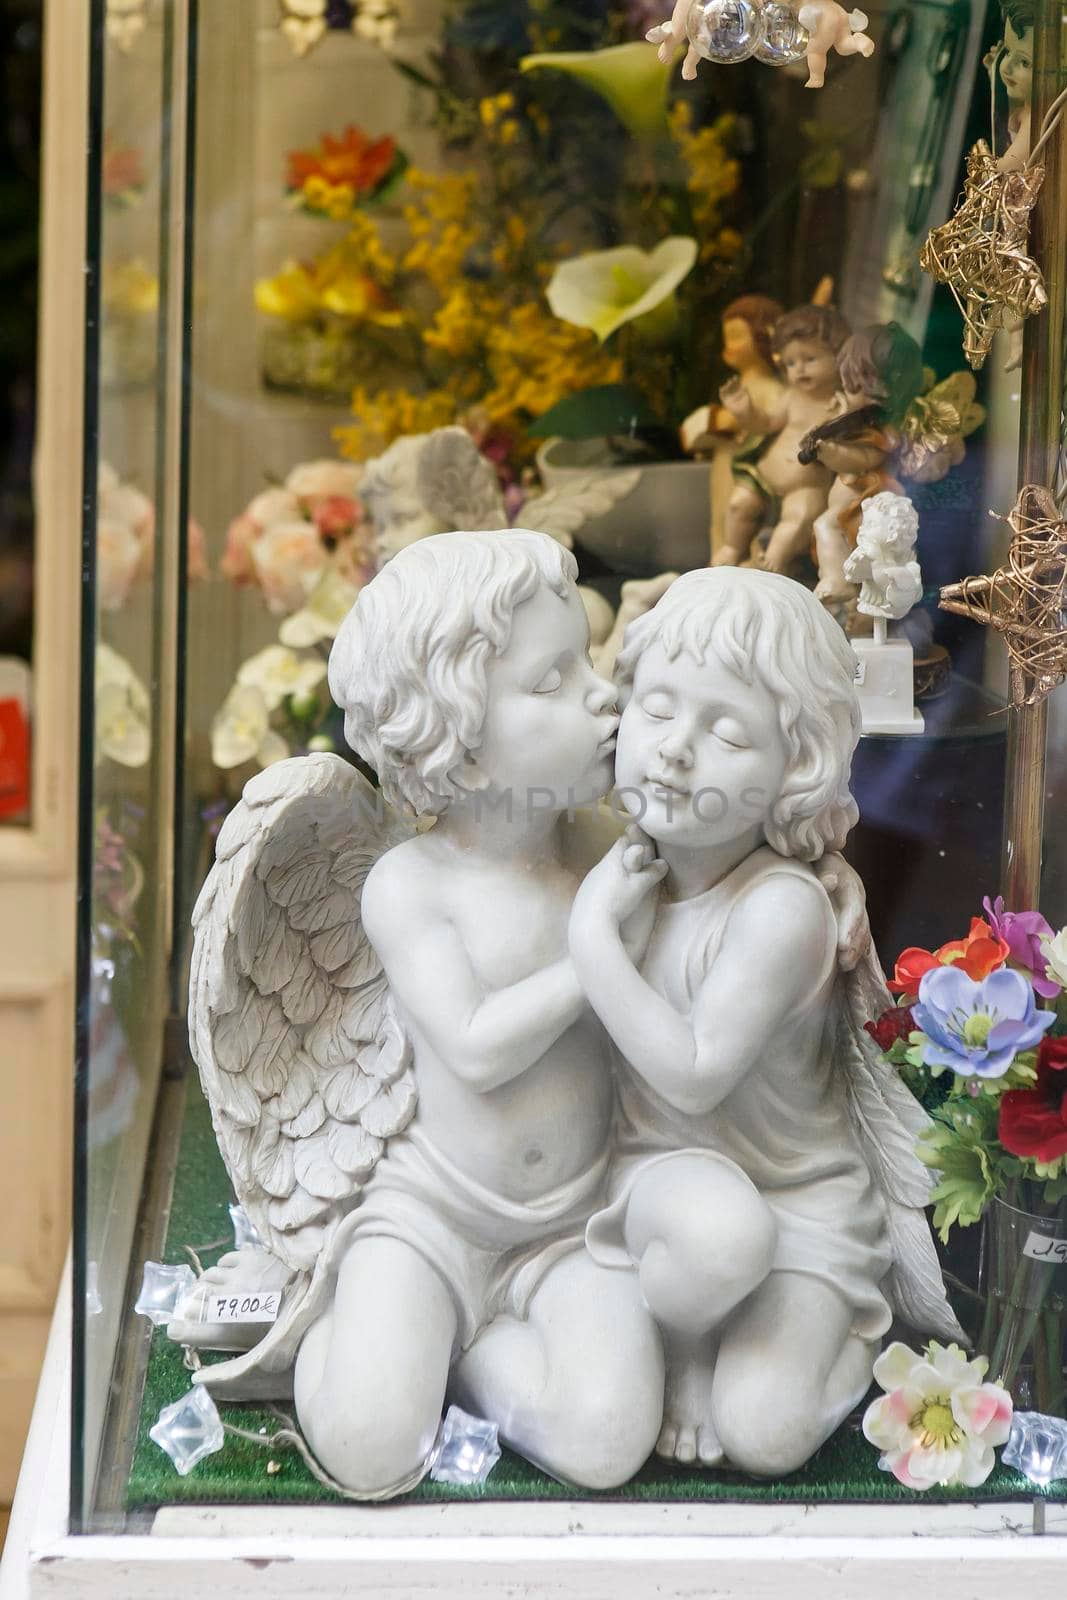 Marble angels in an antique shop window by elenarostunova